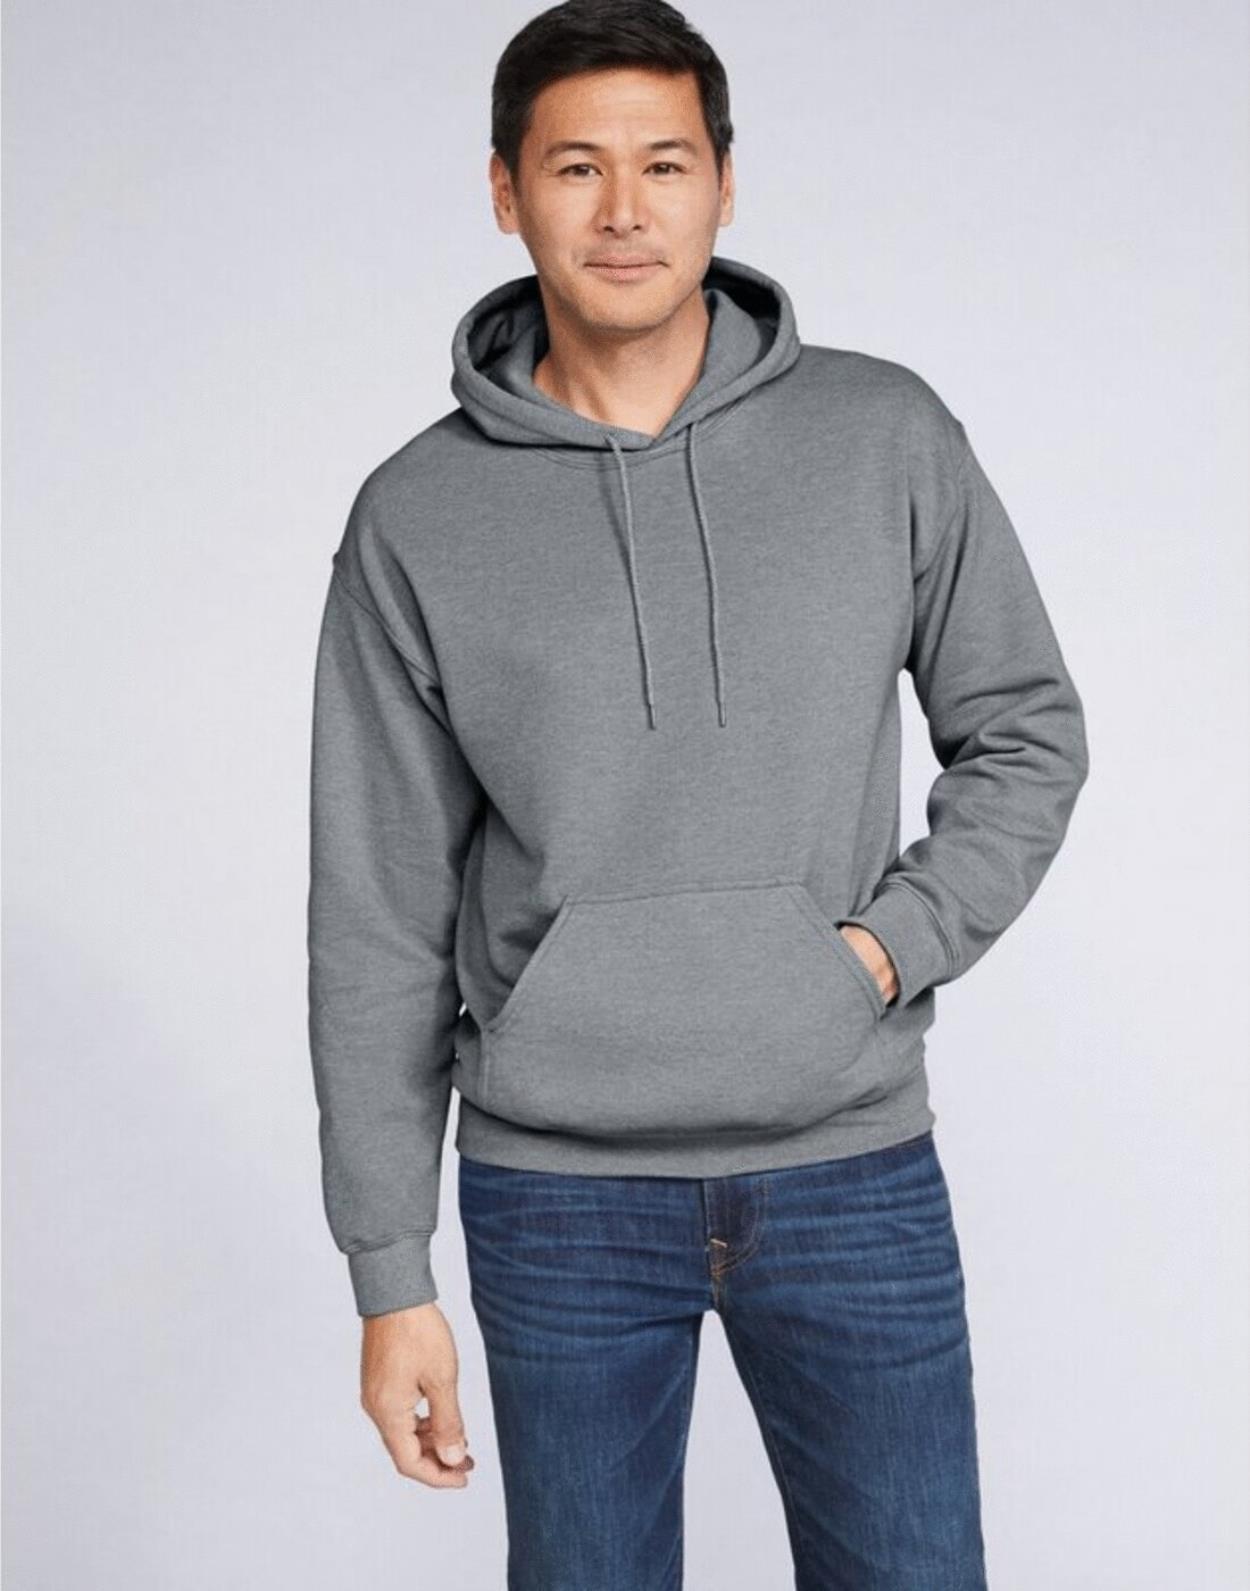 GD57 18500 Heavyweight Hooded Sweatshirt main image